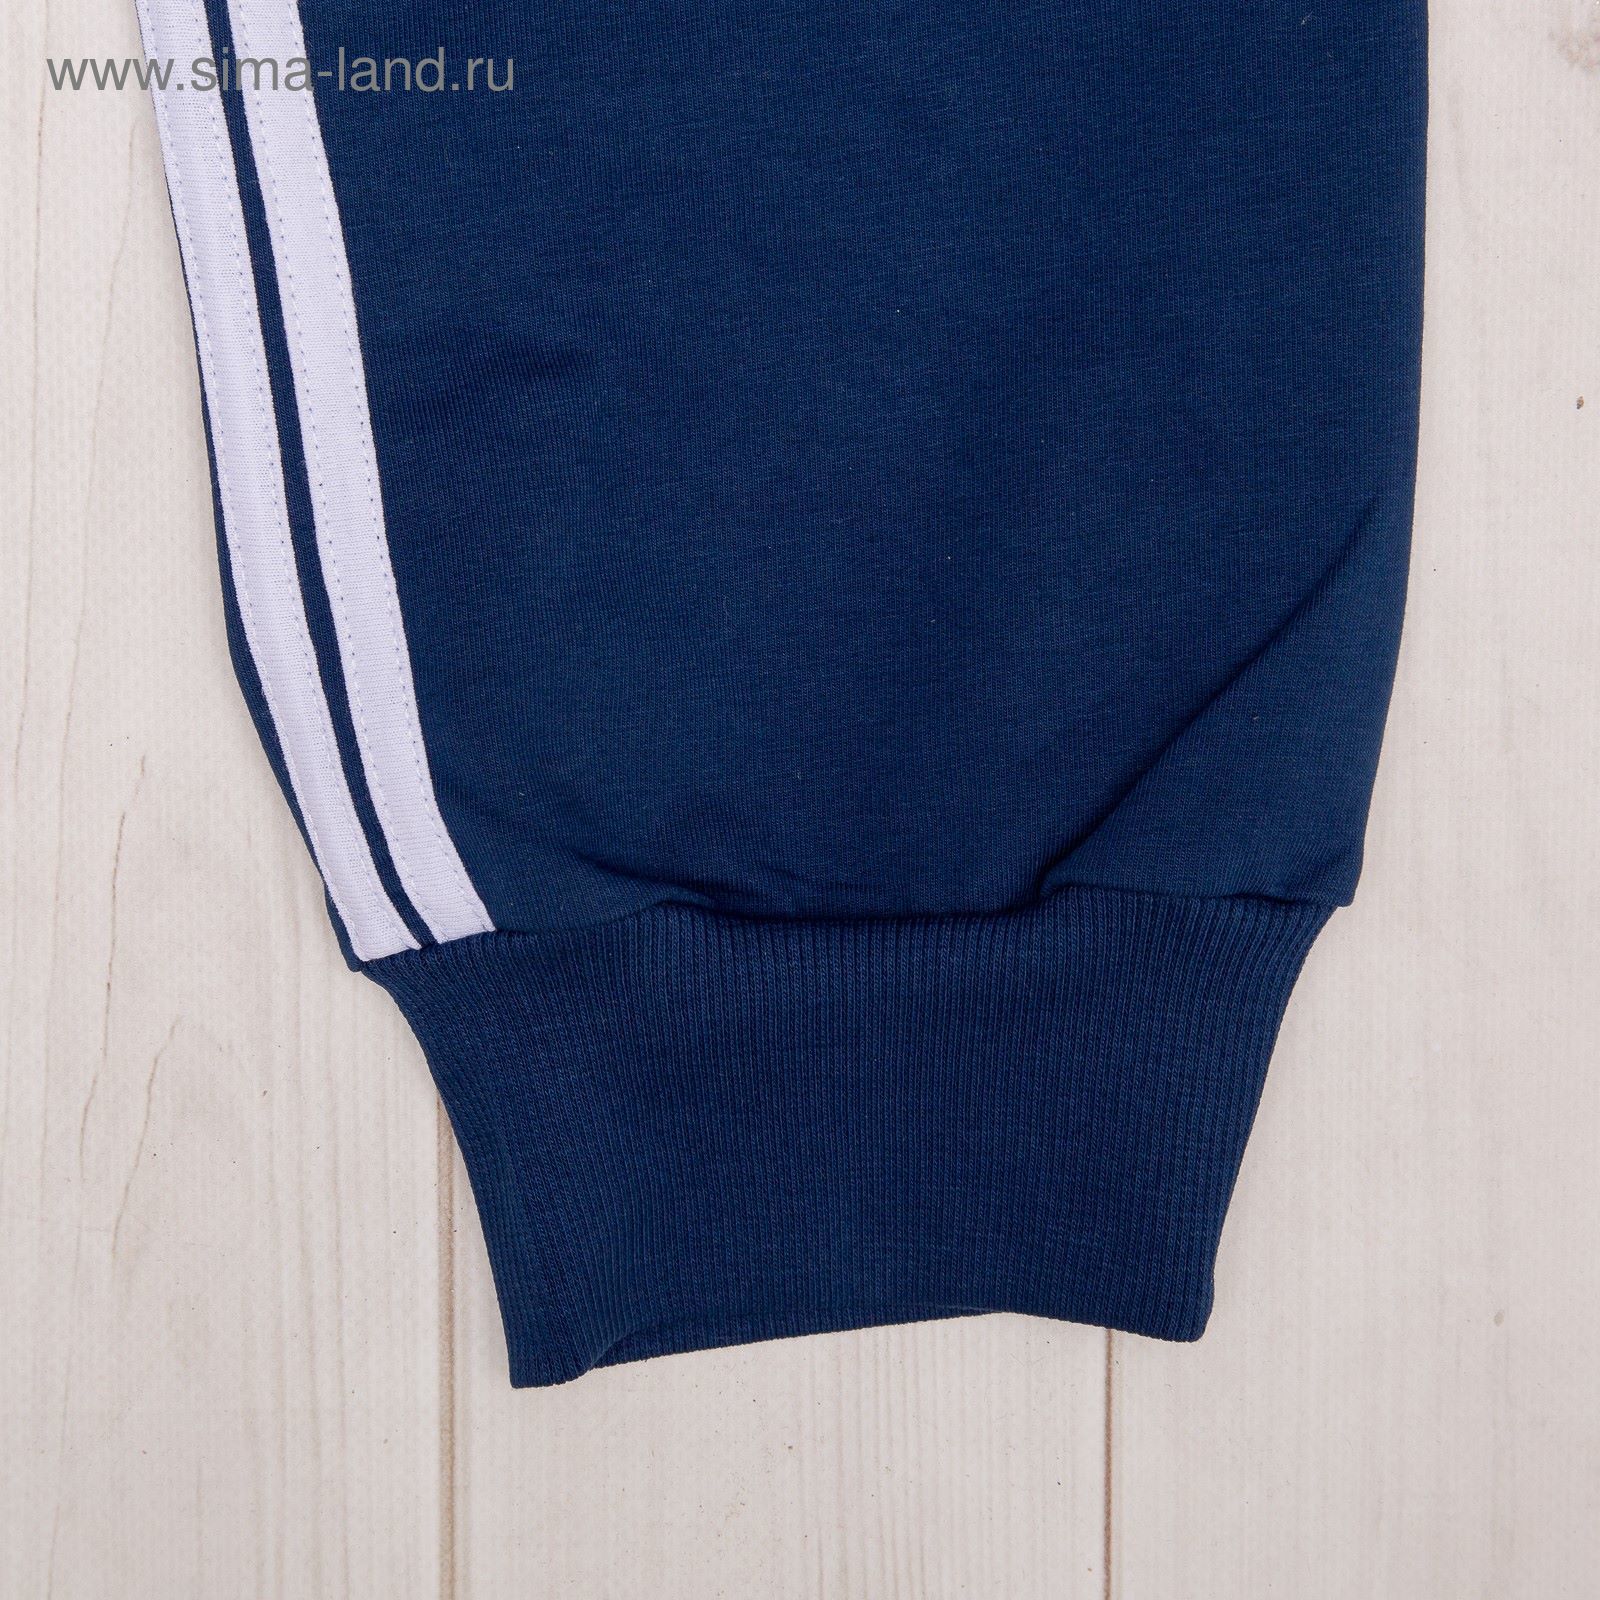 Комплект для девочки (куртка, брюки), рост 140 см, цвет тёмно-синий Л483_Д